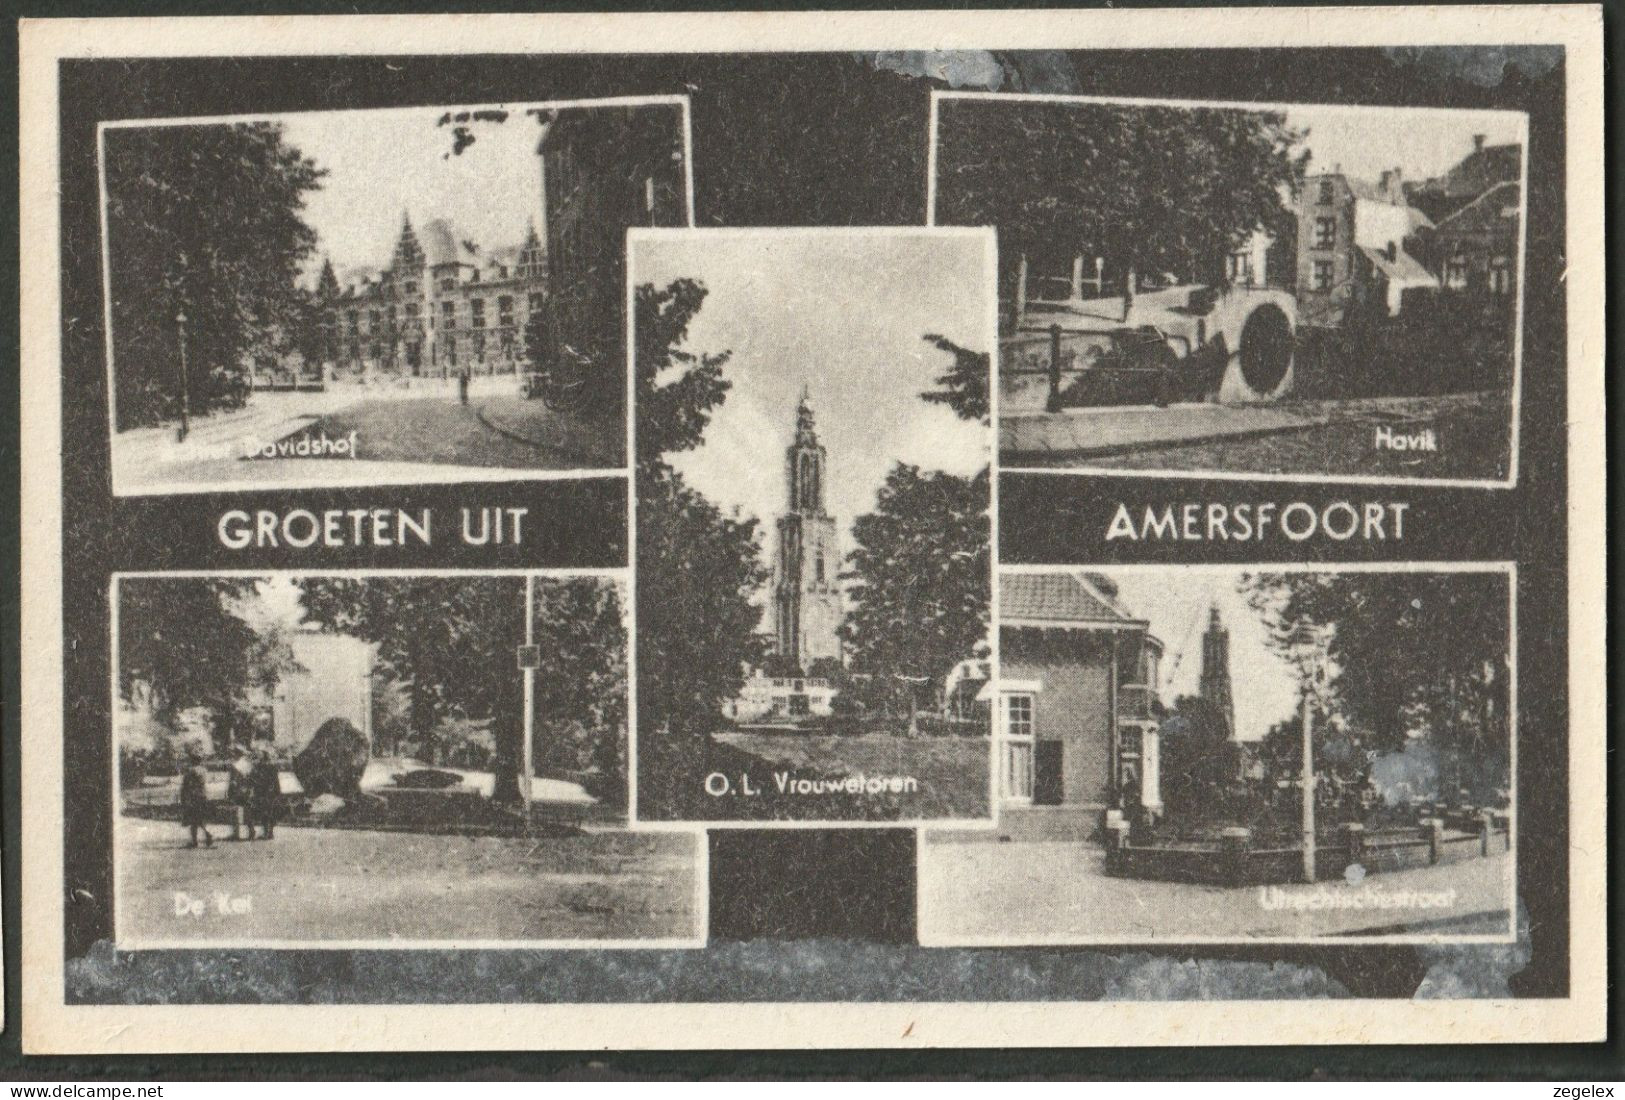 Amersfoort - De Kei, Davidshof, Havik, Utrechtsestraat - Amersfoort